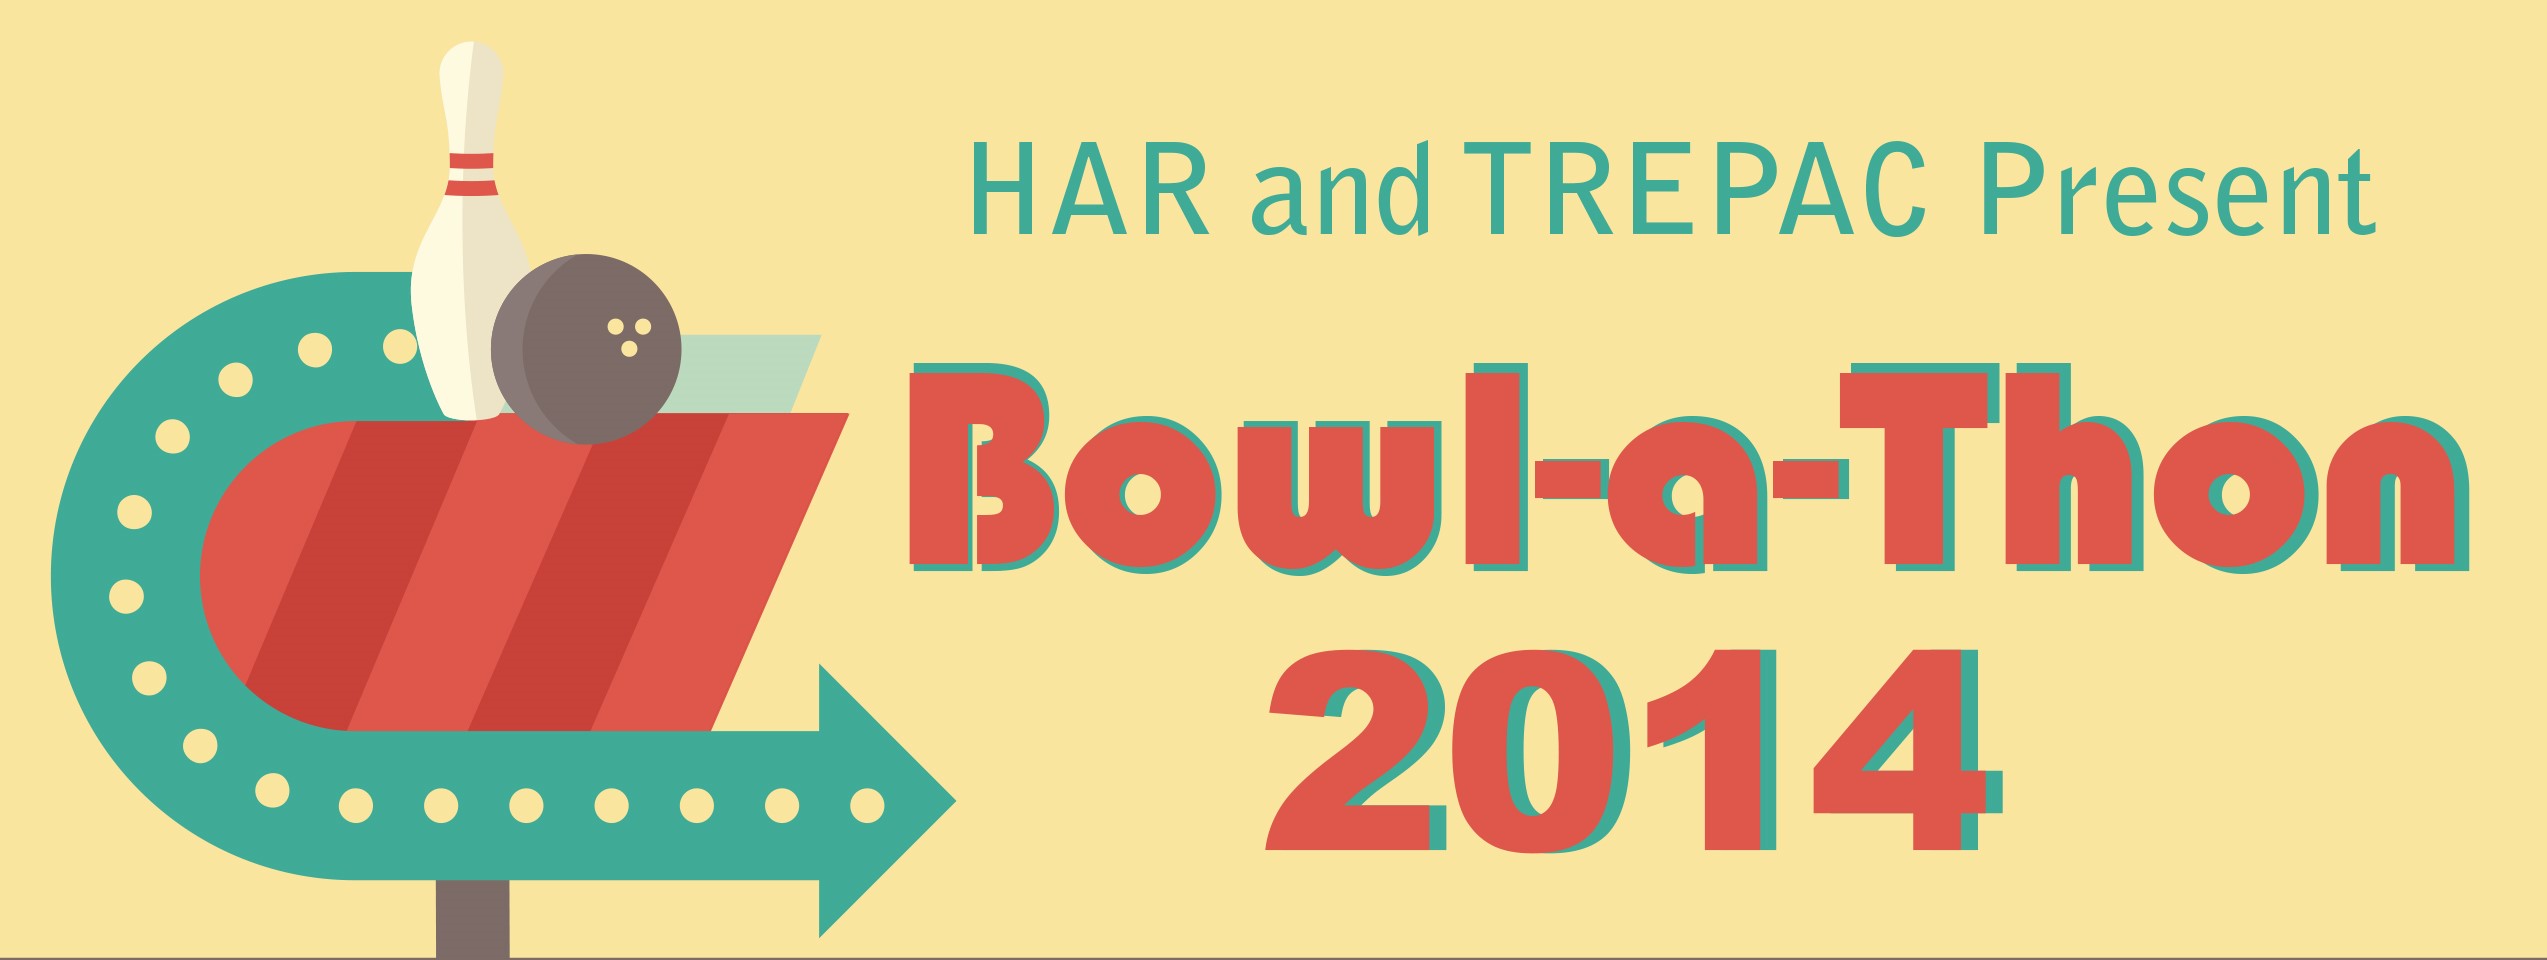 HAR TREPAC Hosts Annual GNW Bowl-a-thon for 2014!